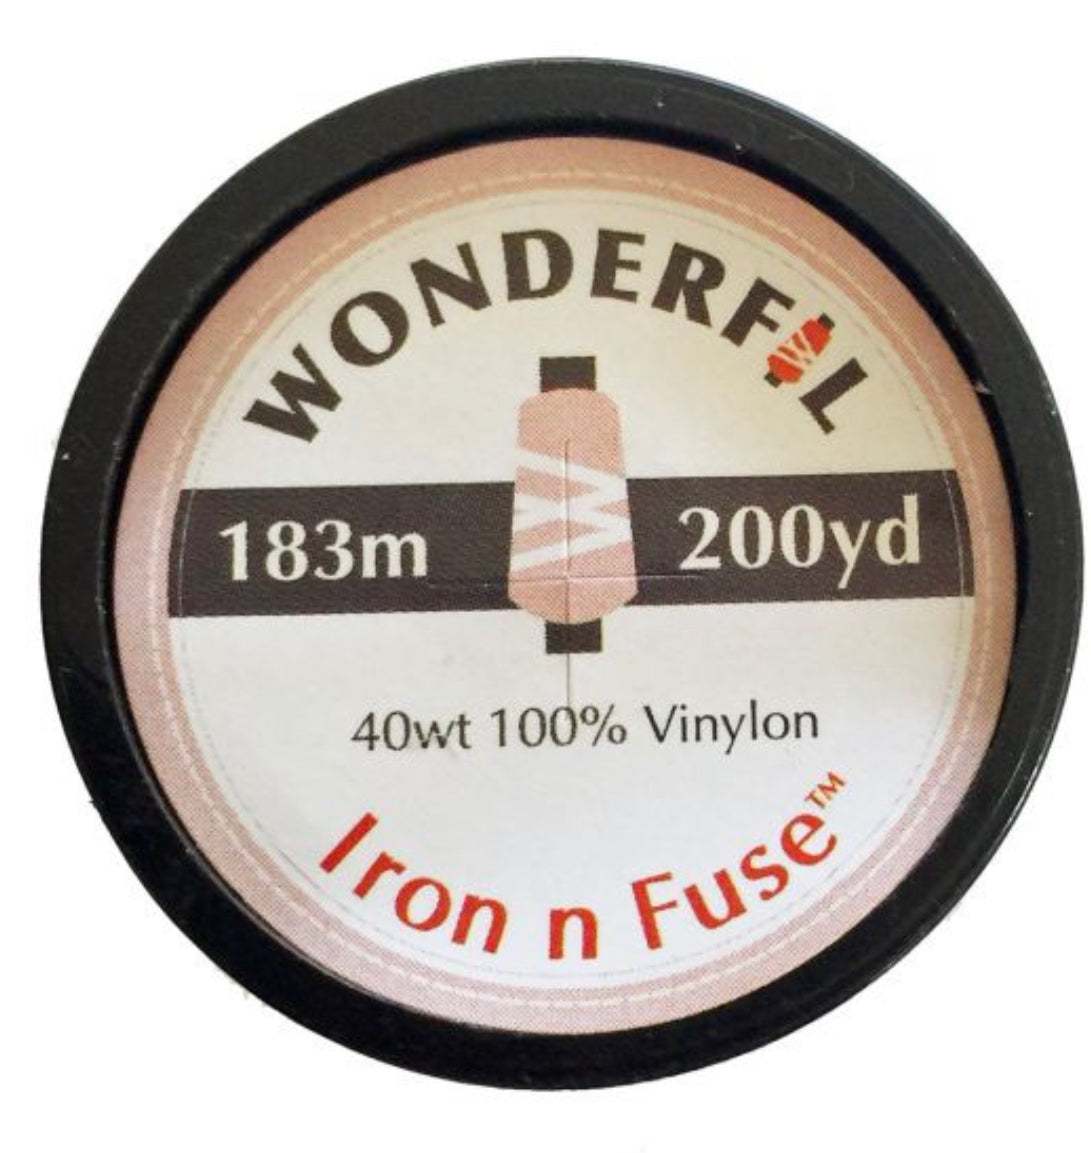 Wonderfil Iron n Fuse thread